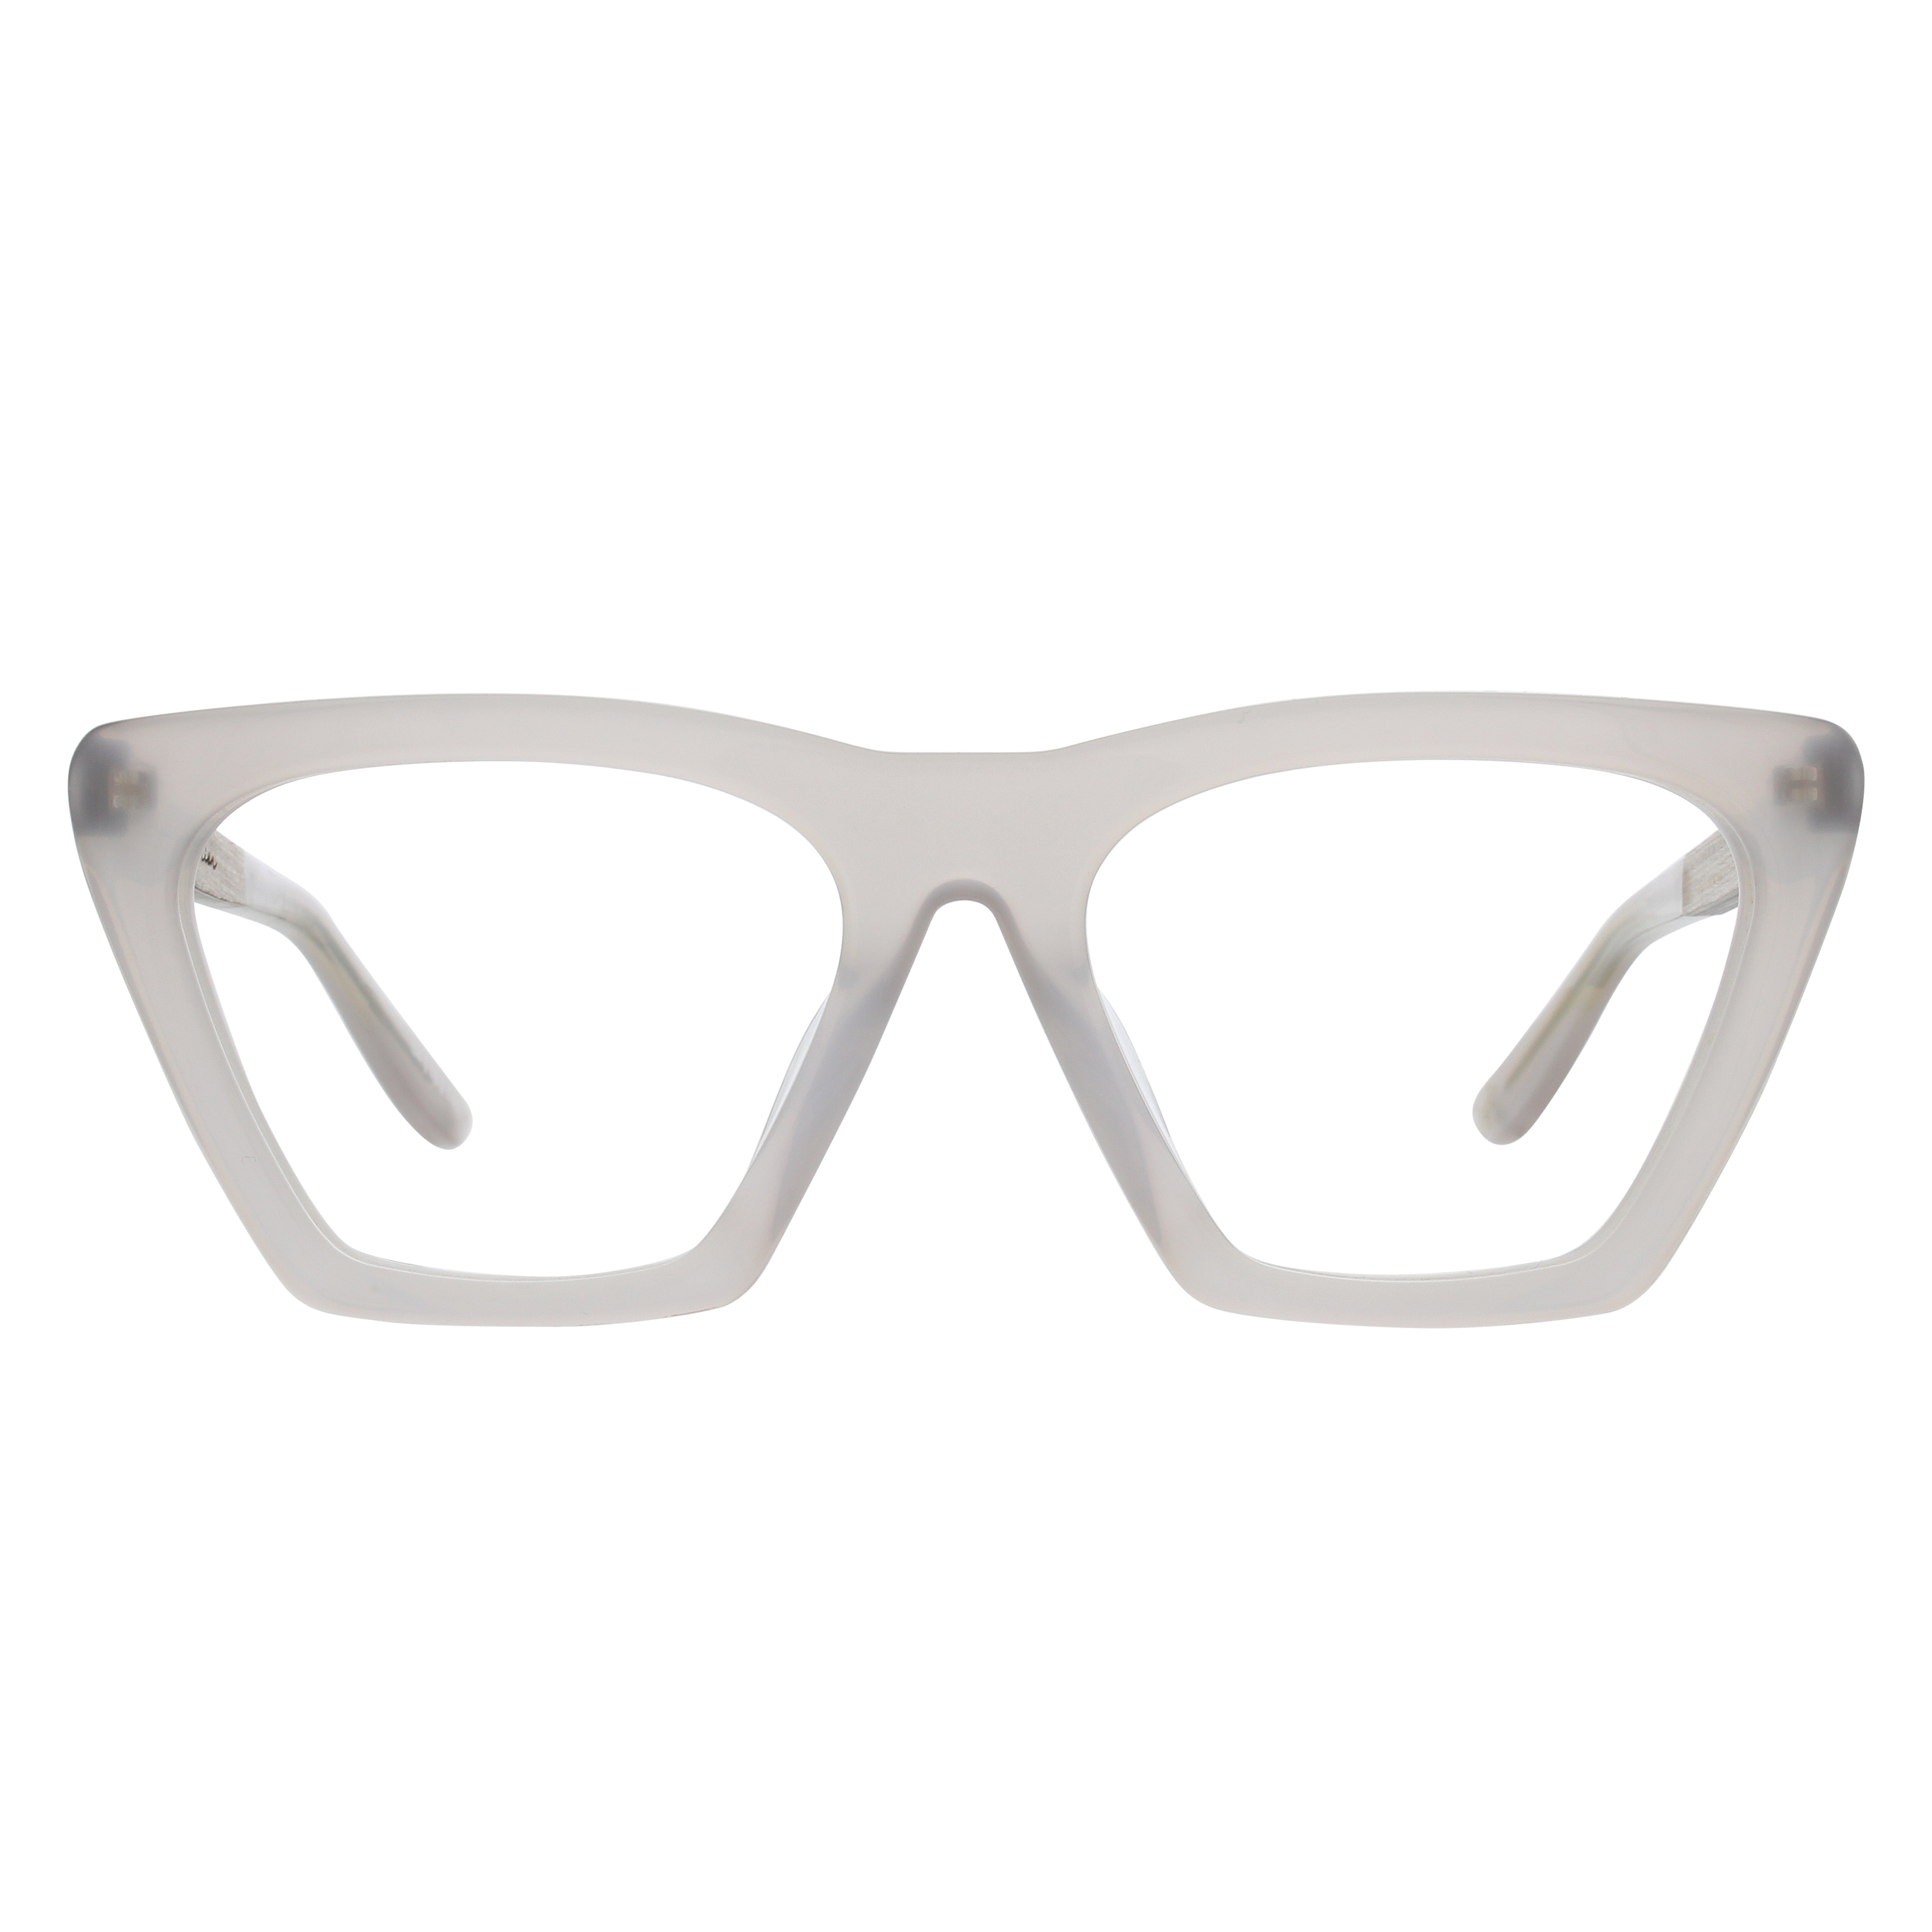 FIGURE Frame - Cloud - Bluelight Eyeglasses Frame - Johnny Fly Eyewear 